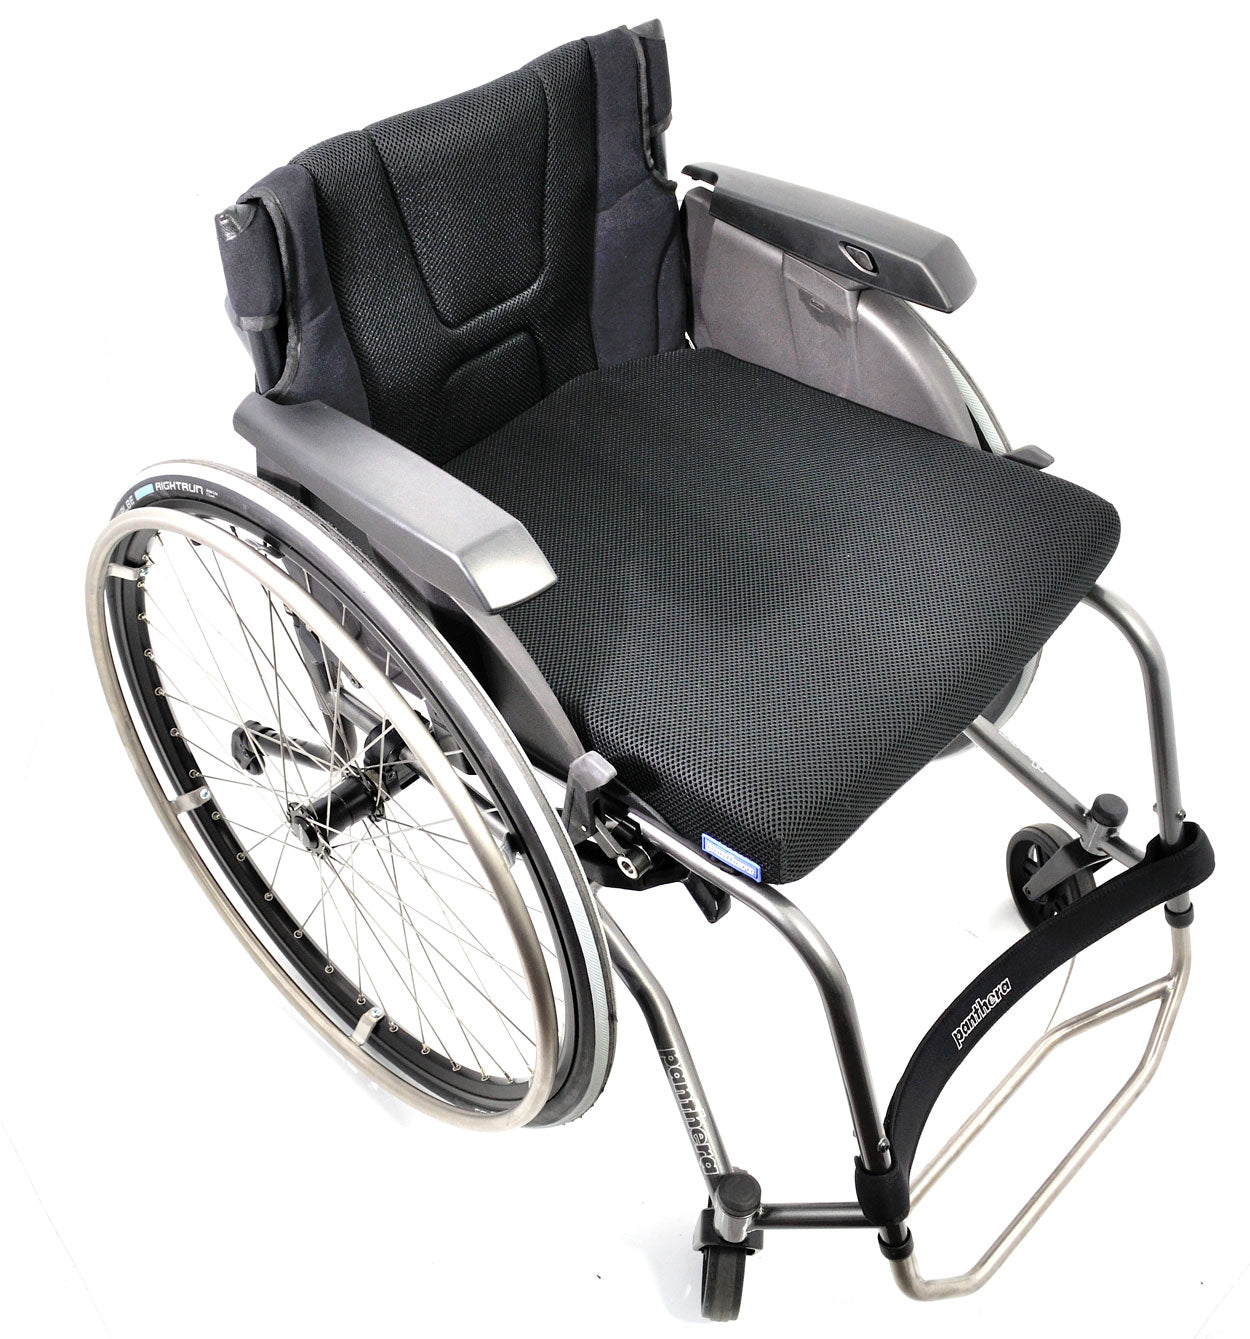 Panthera S3 super lightweight rigid-framed self propelled wheelchair